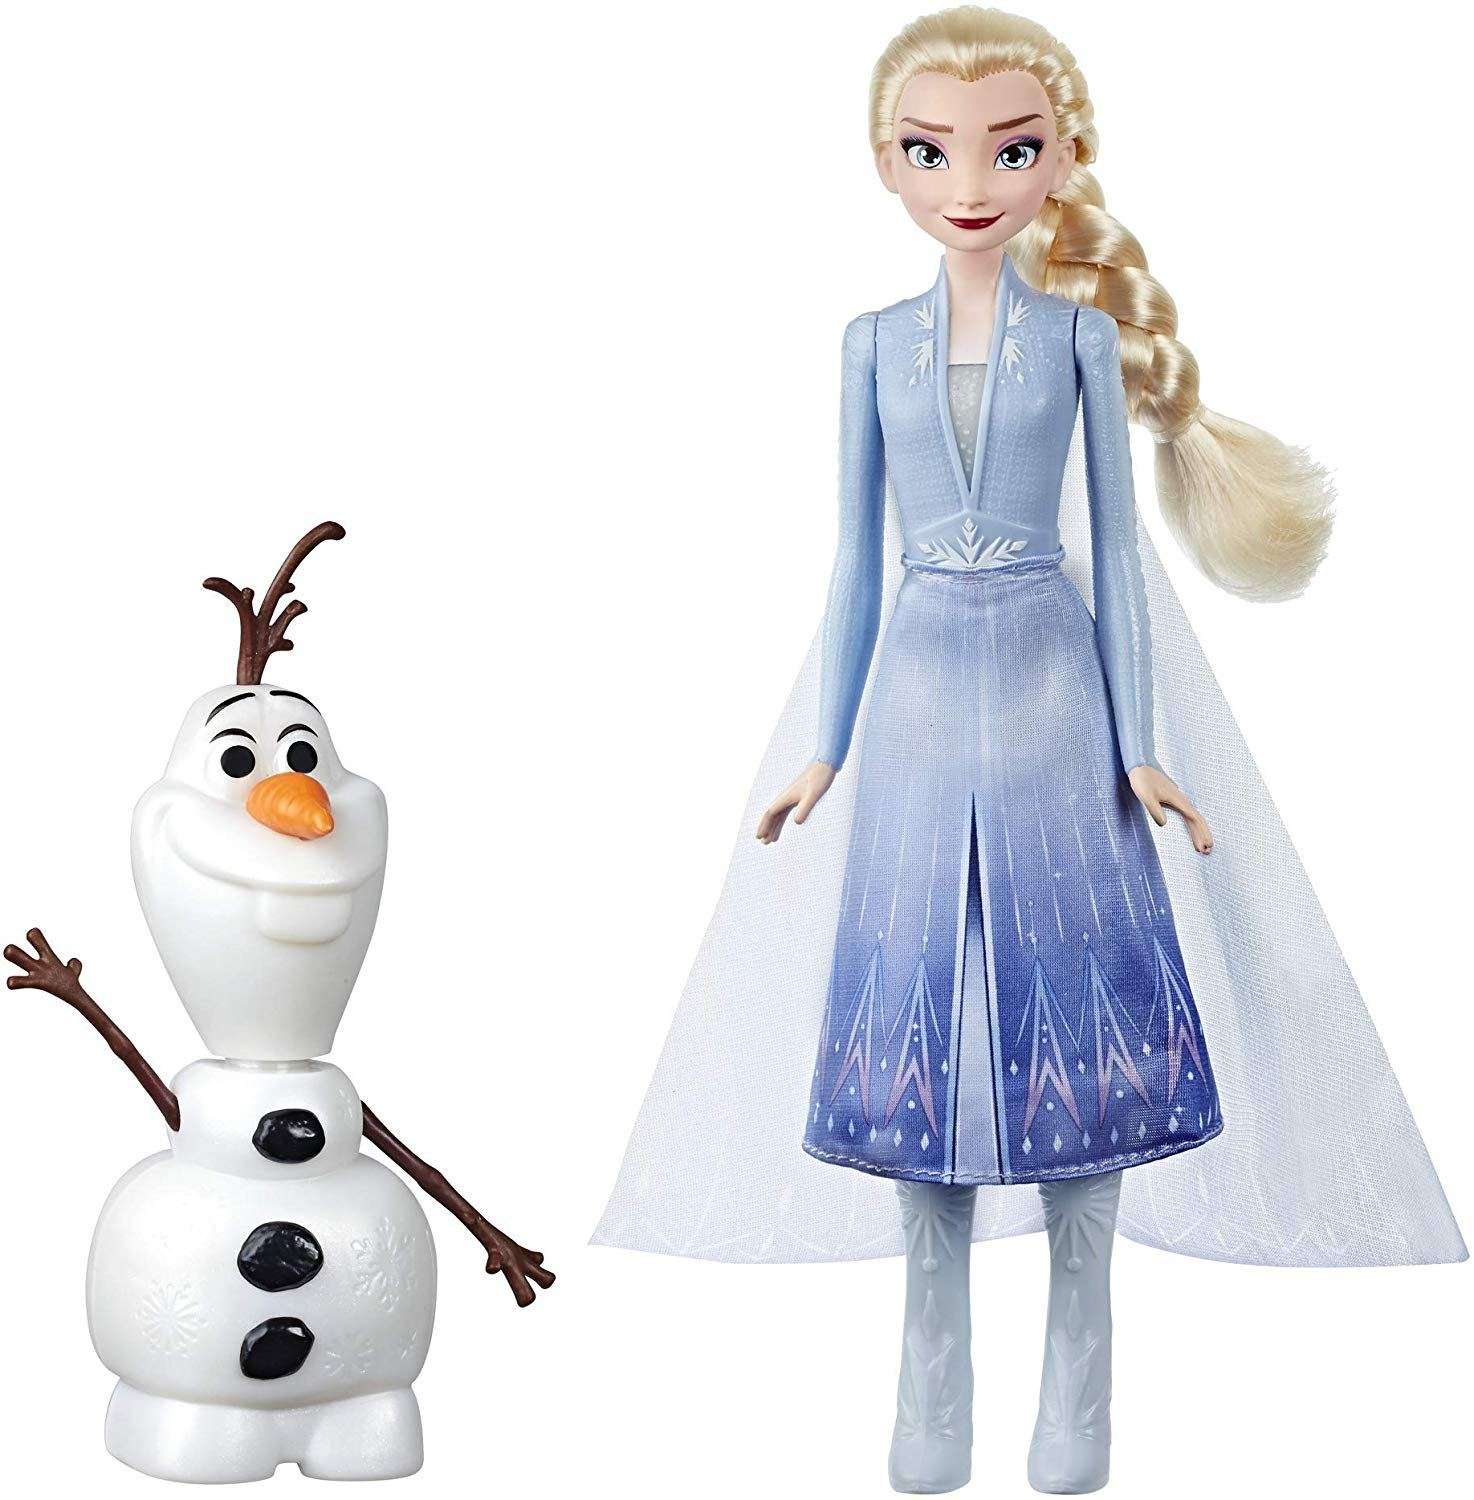 Frozen 2 - Olaf and Elsa (E5508EU4)